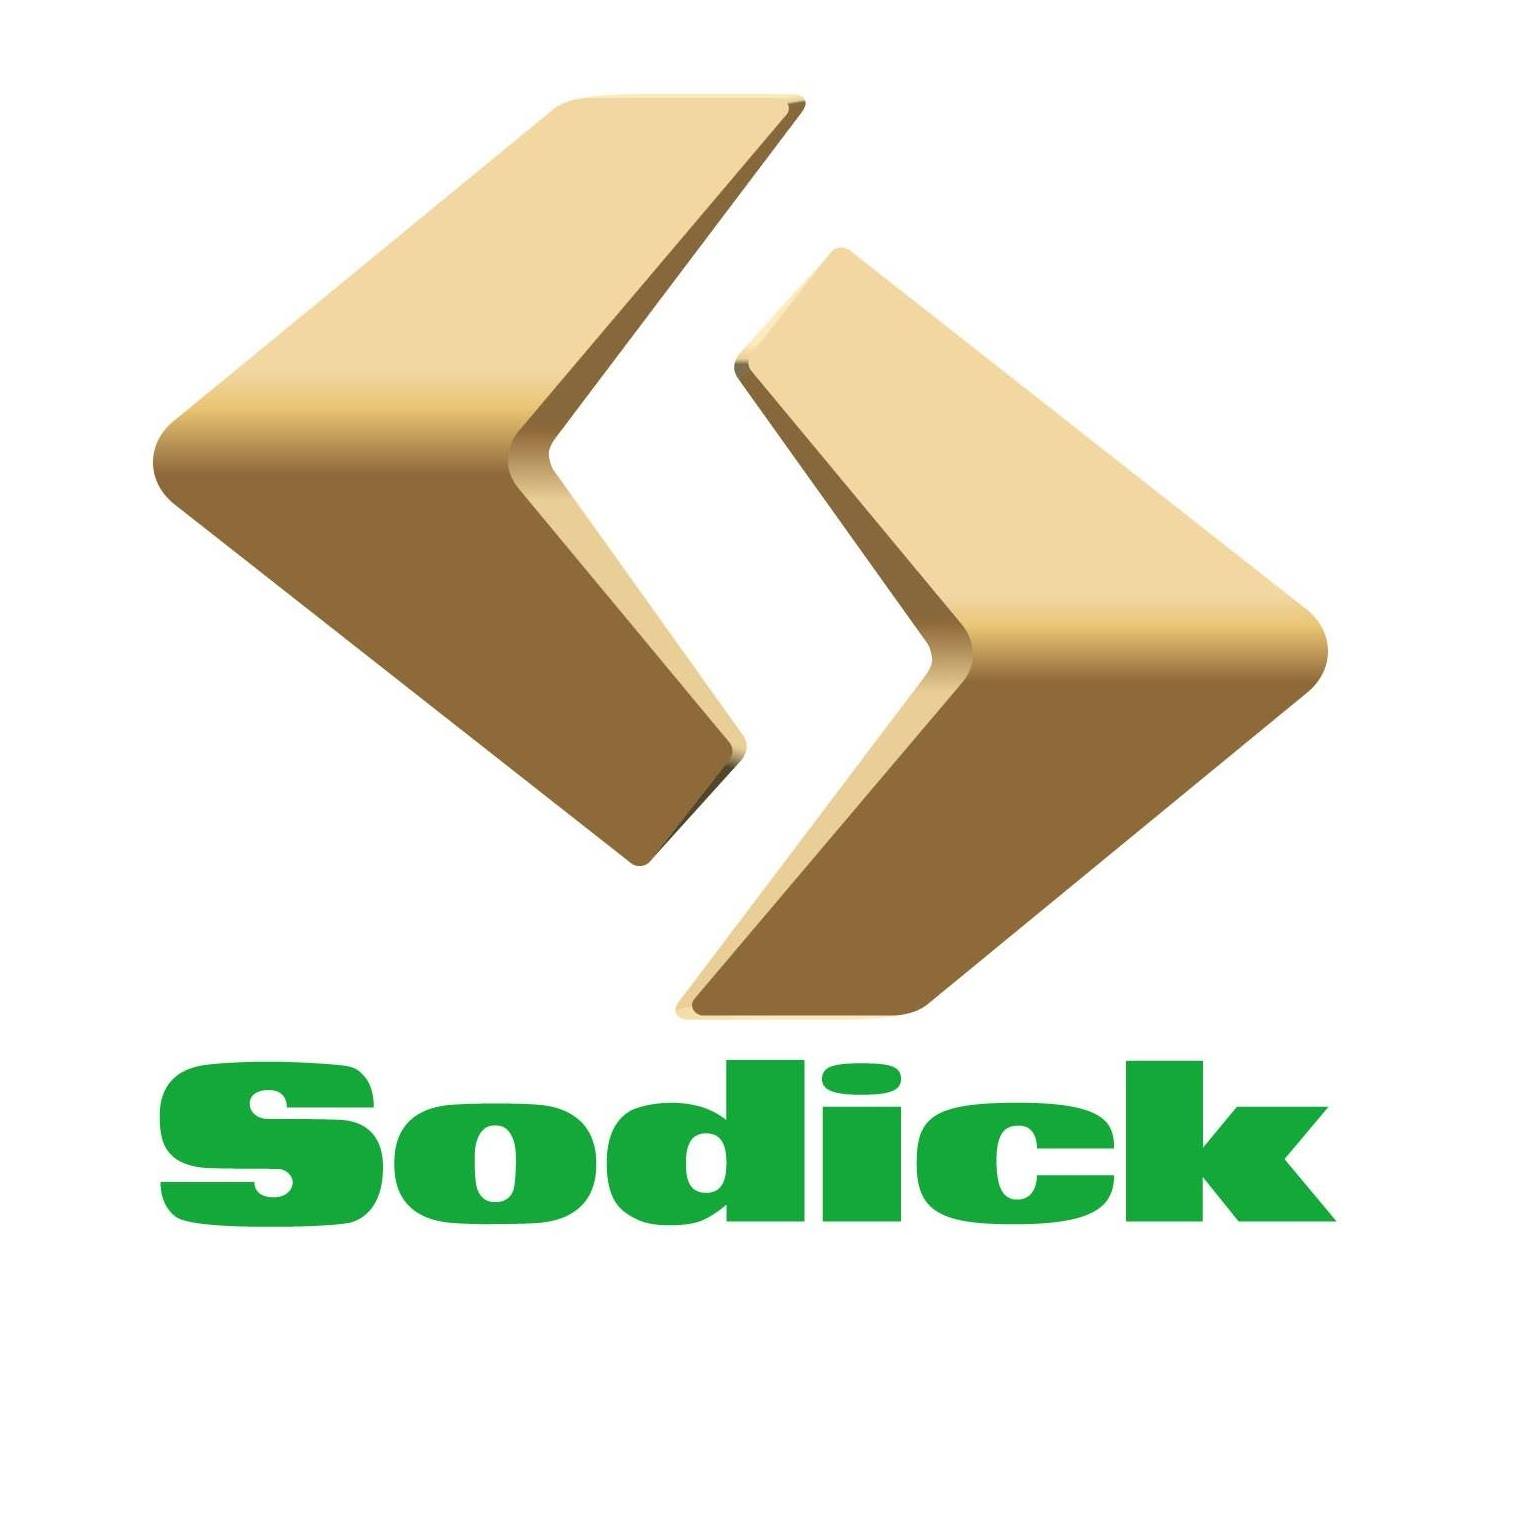 Sodick logo.